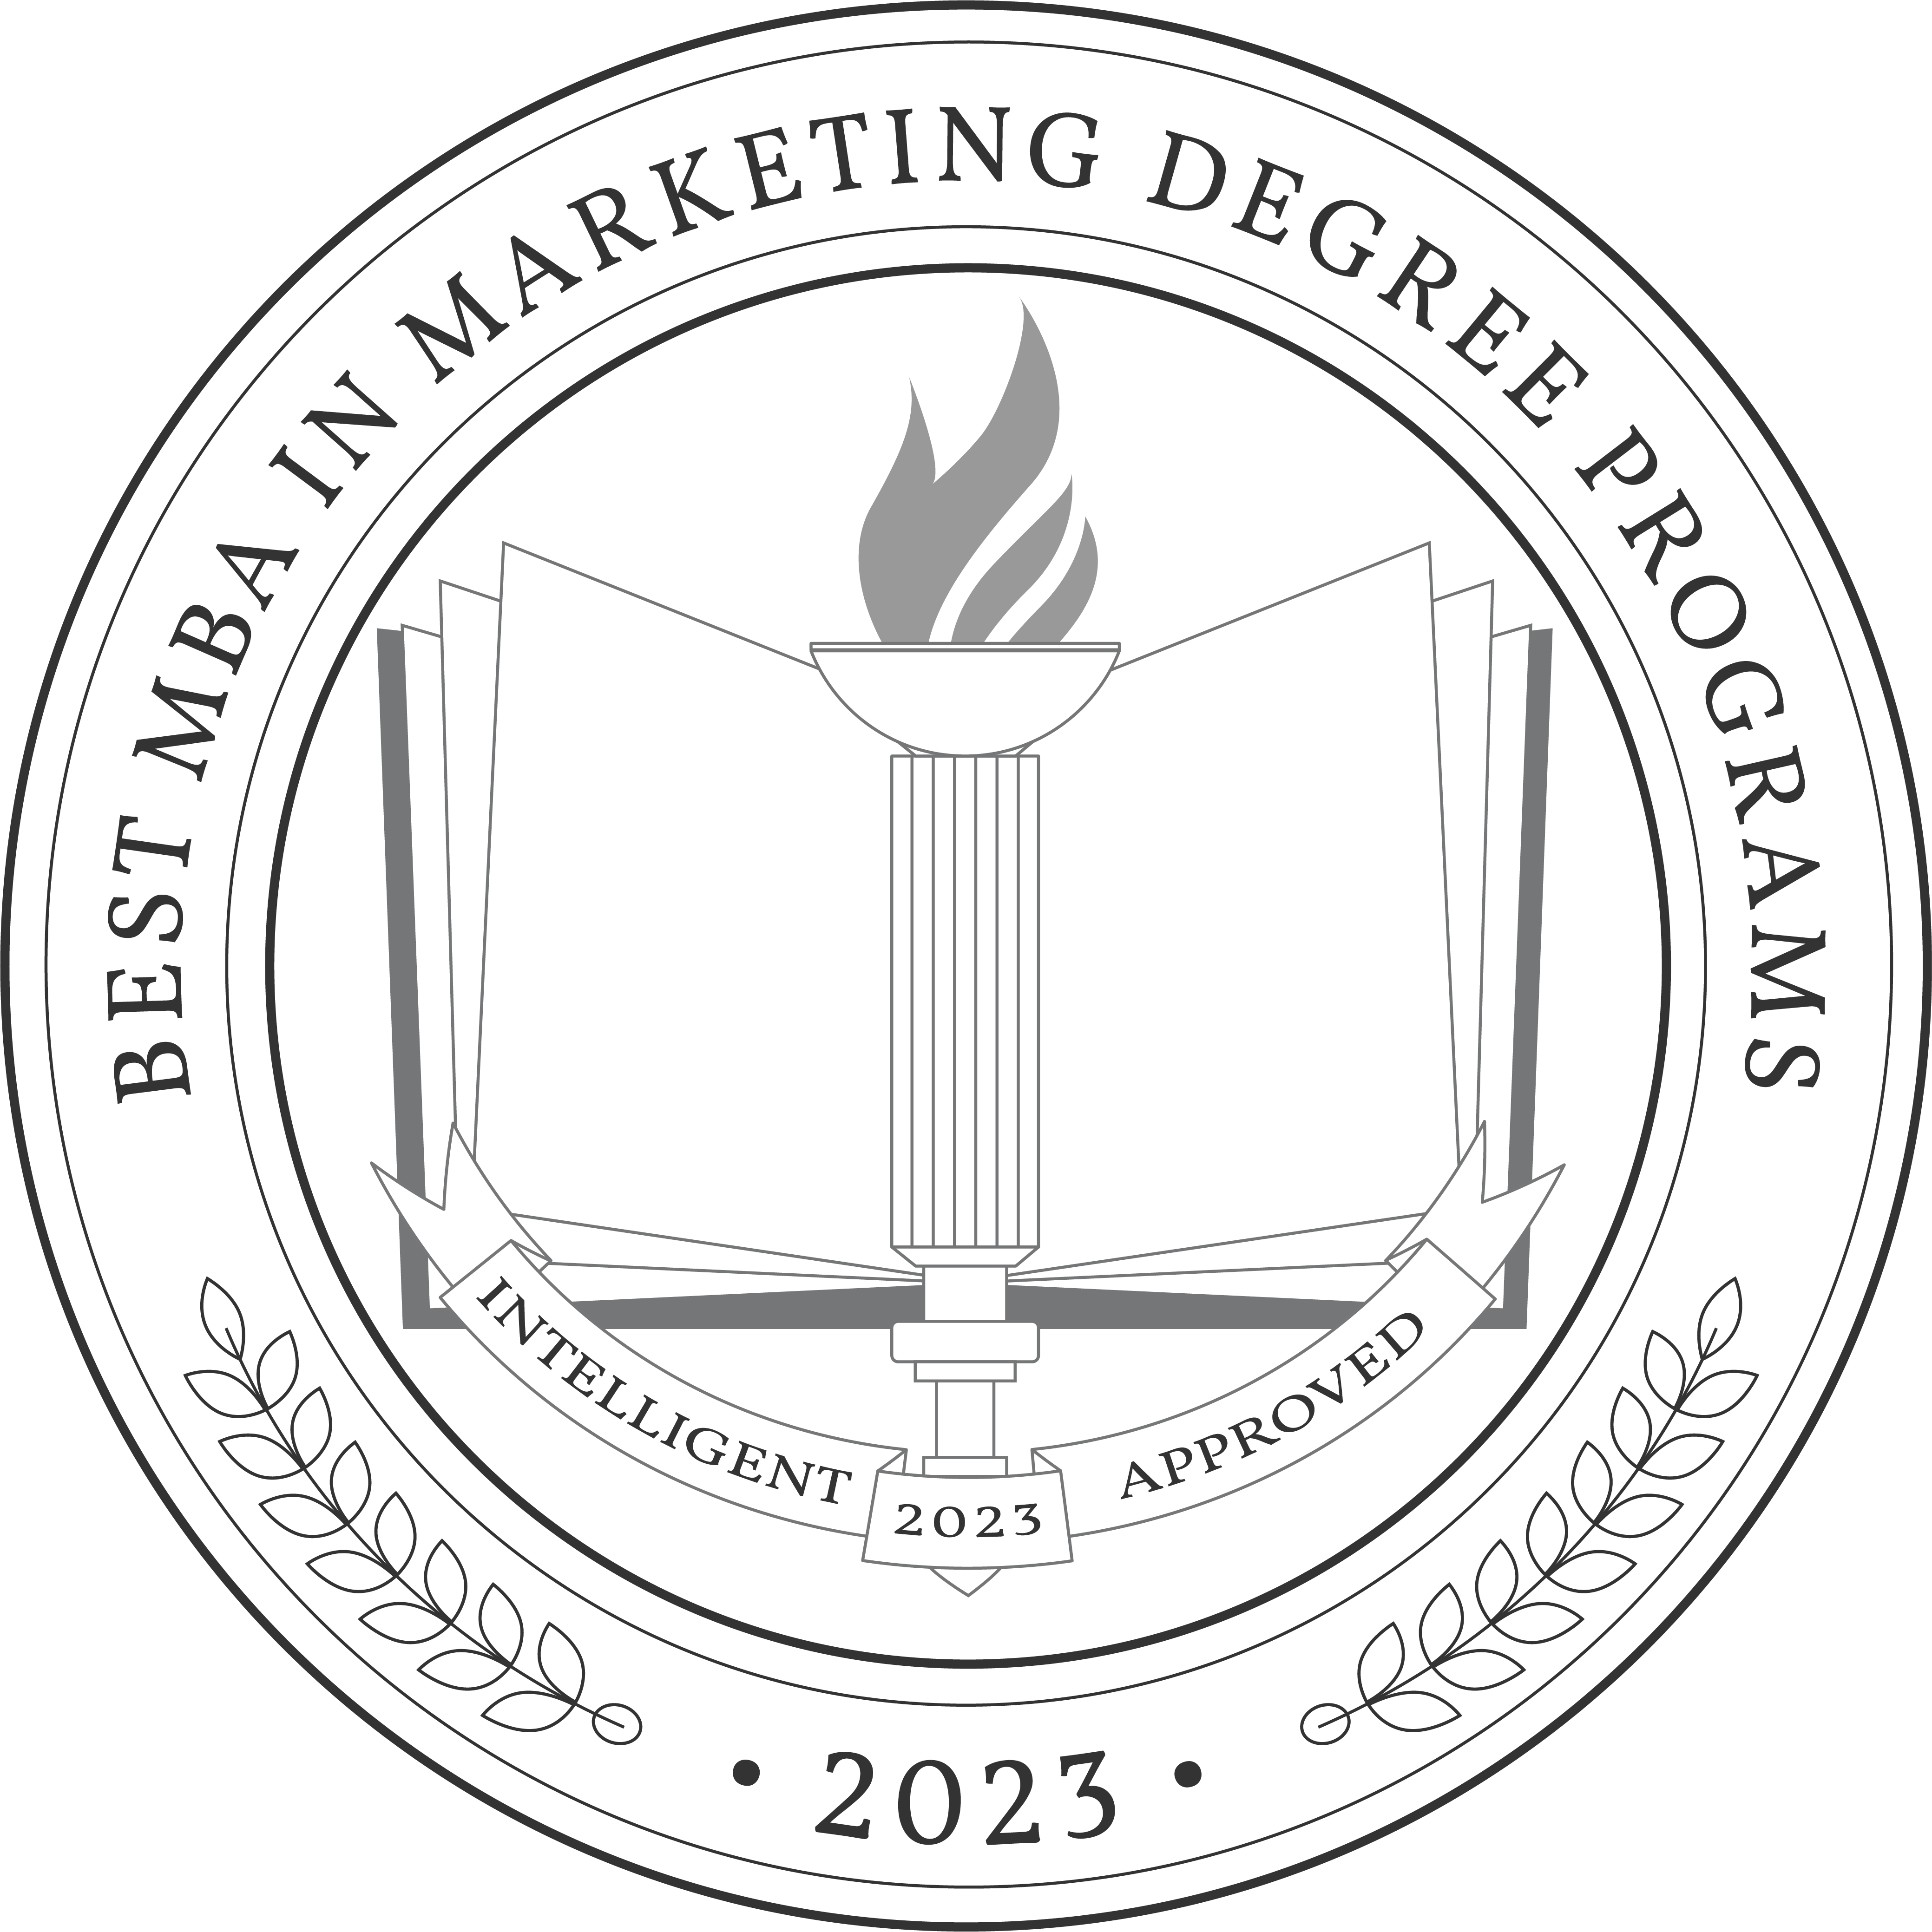 Best MBA in Marketing Degree Programs 2023